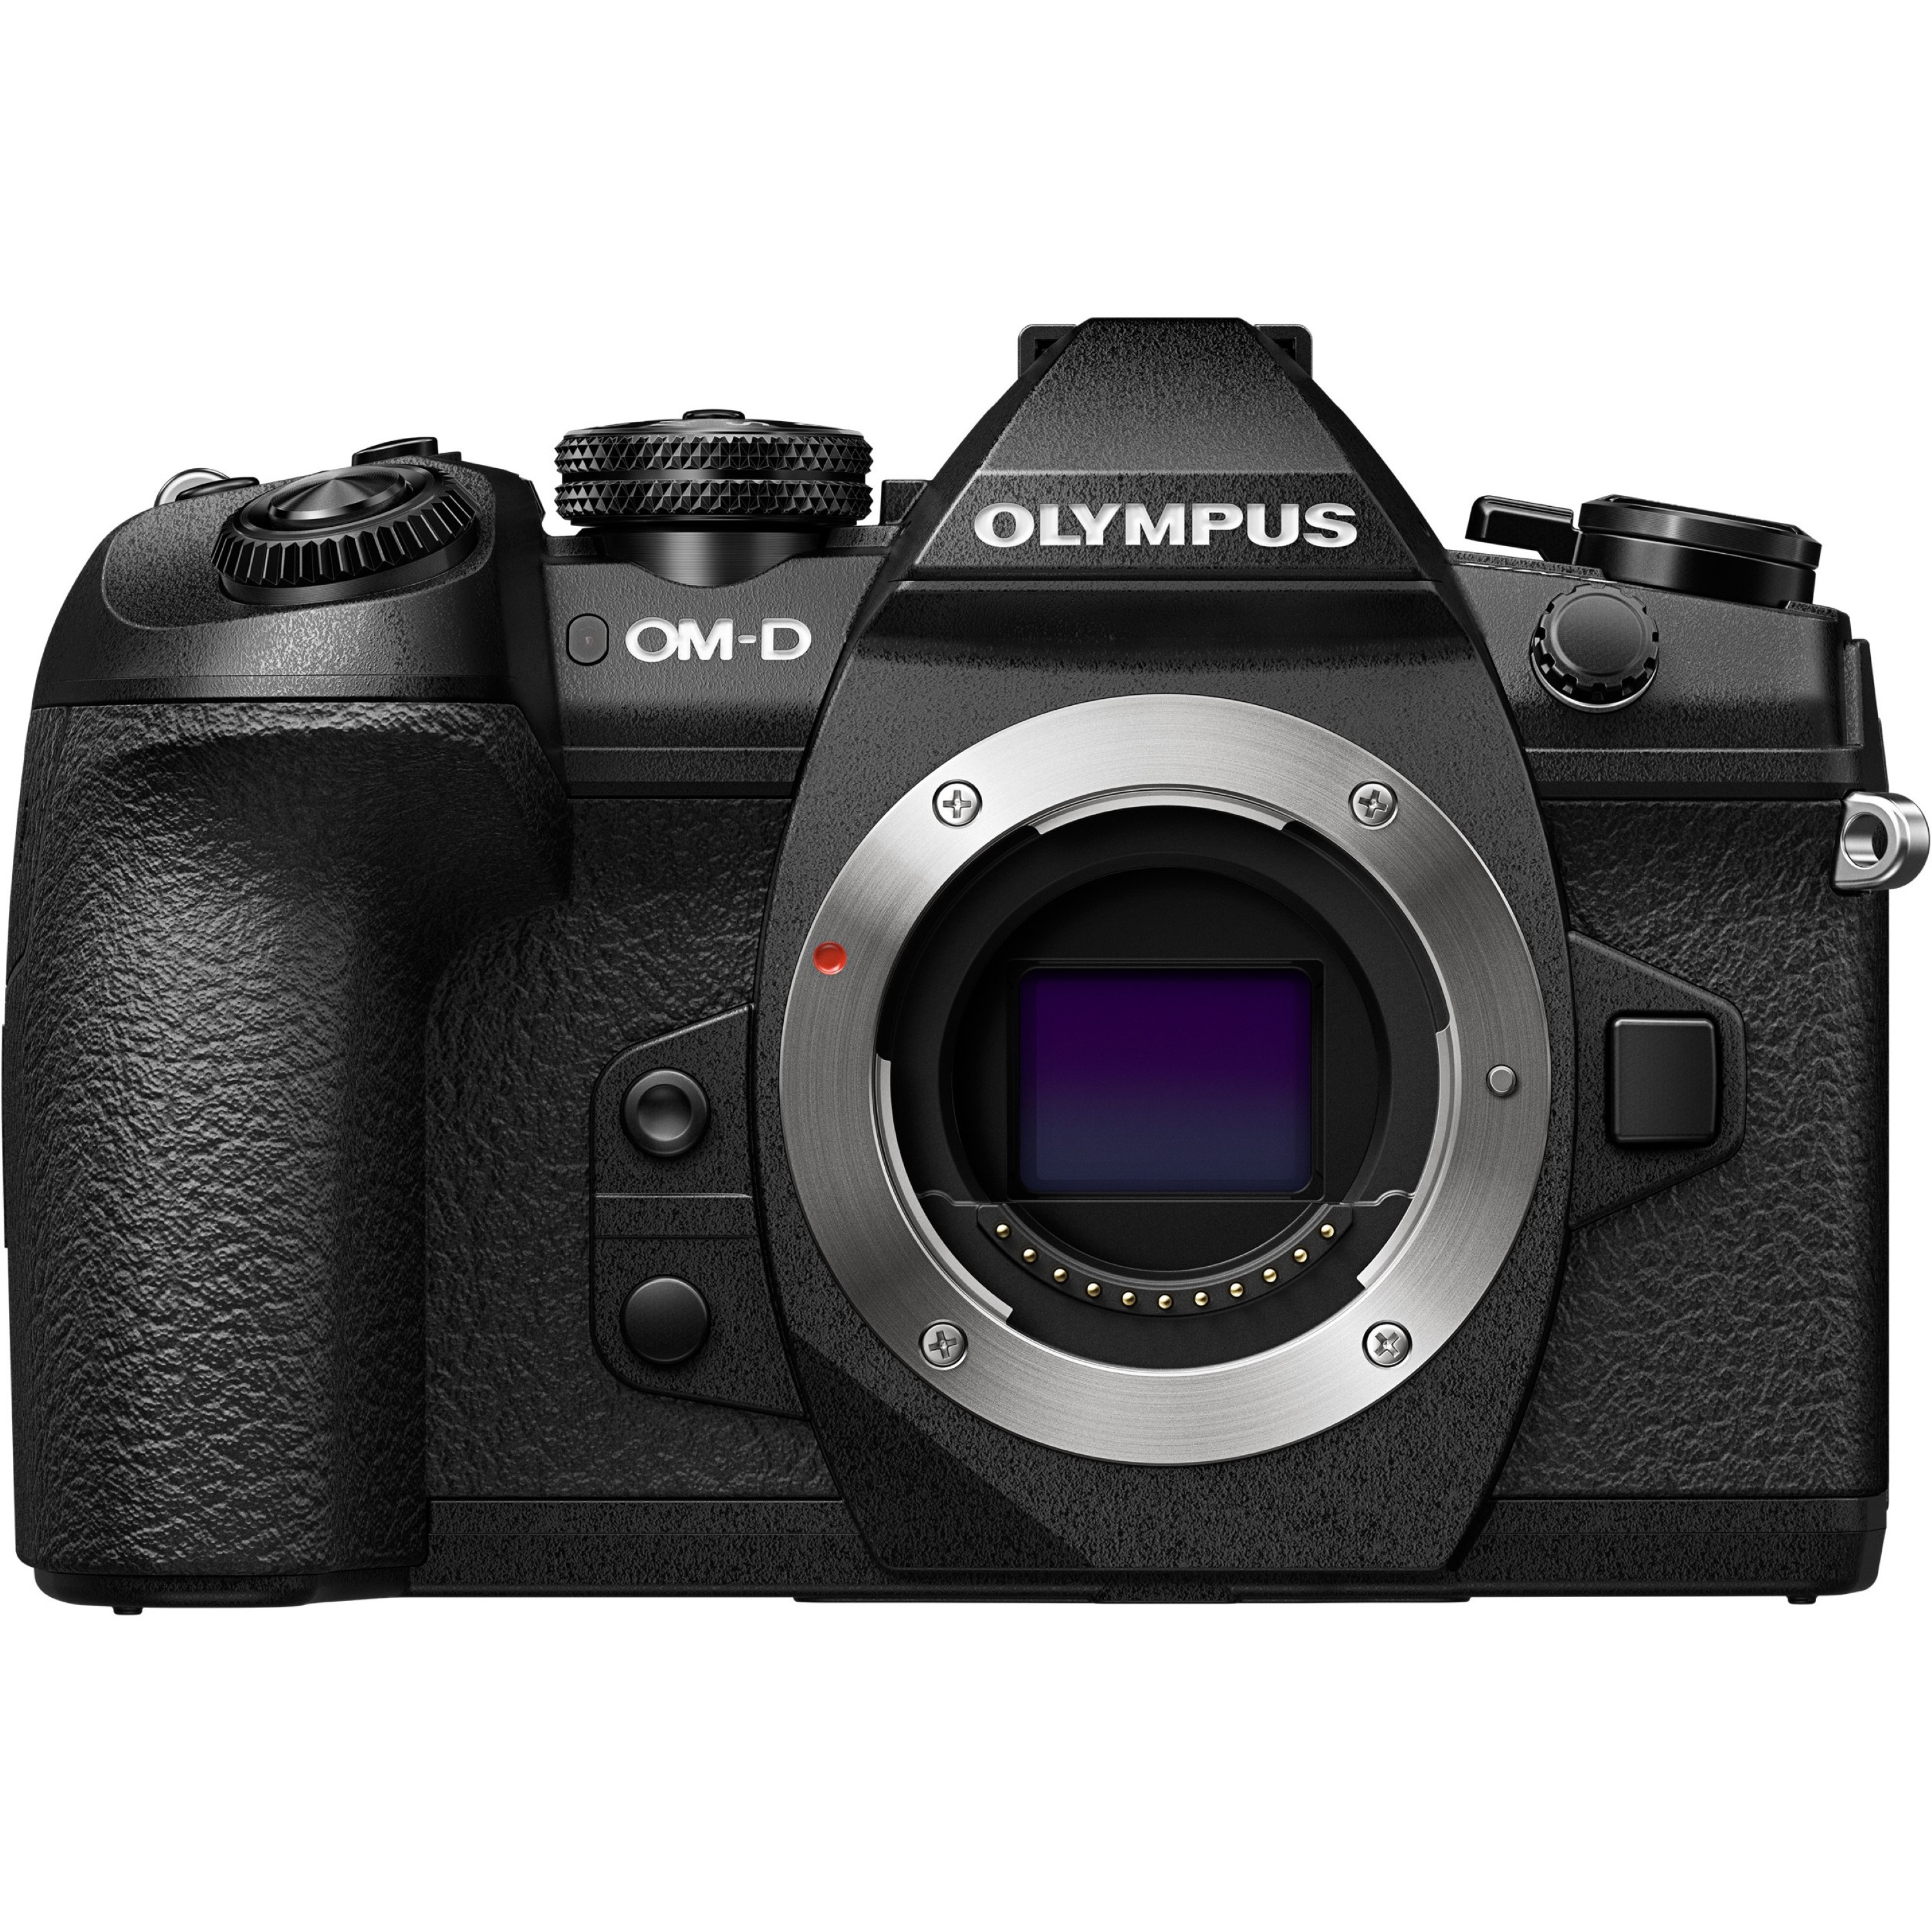 Olympus V207060BU000 OM-D E-M1 Mark II Mirrorless Camera Body Only - Black - image 1 of 5